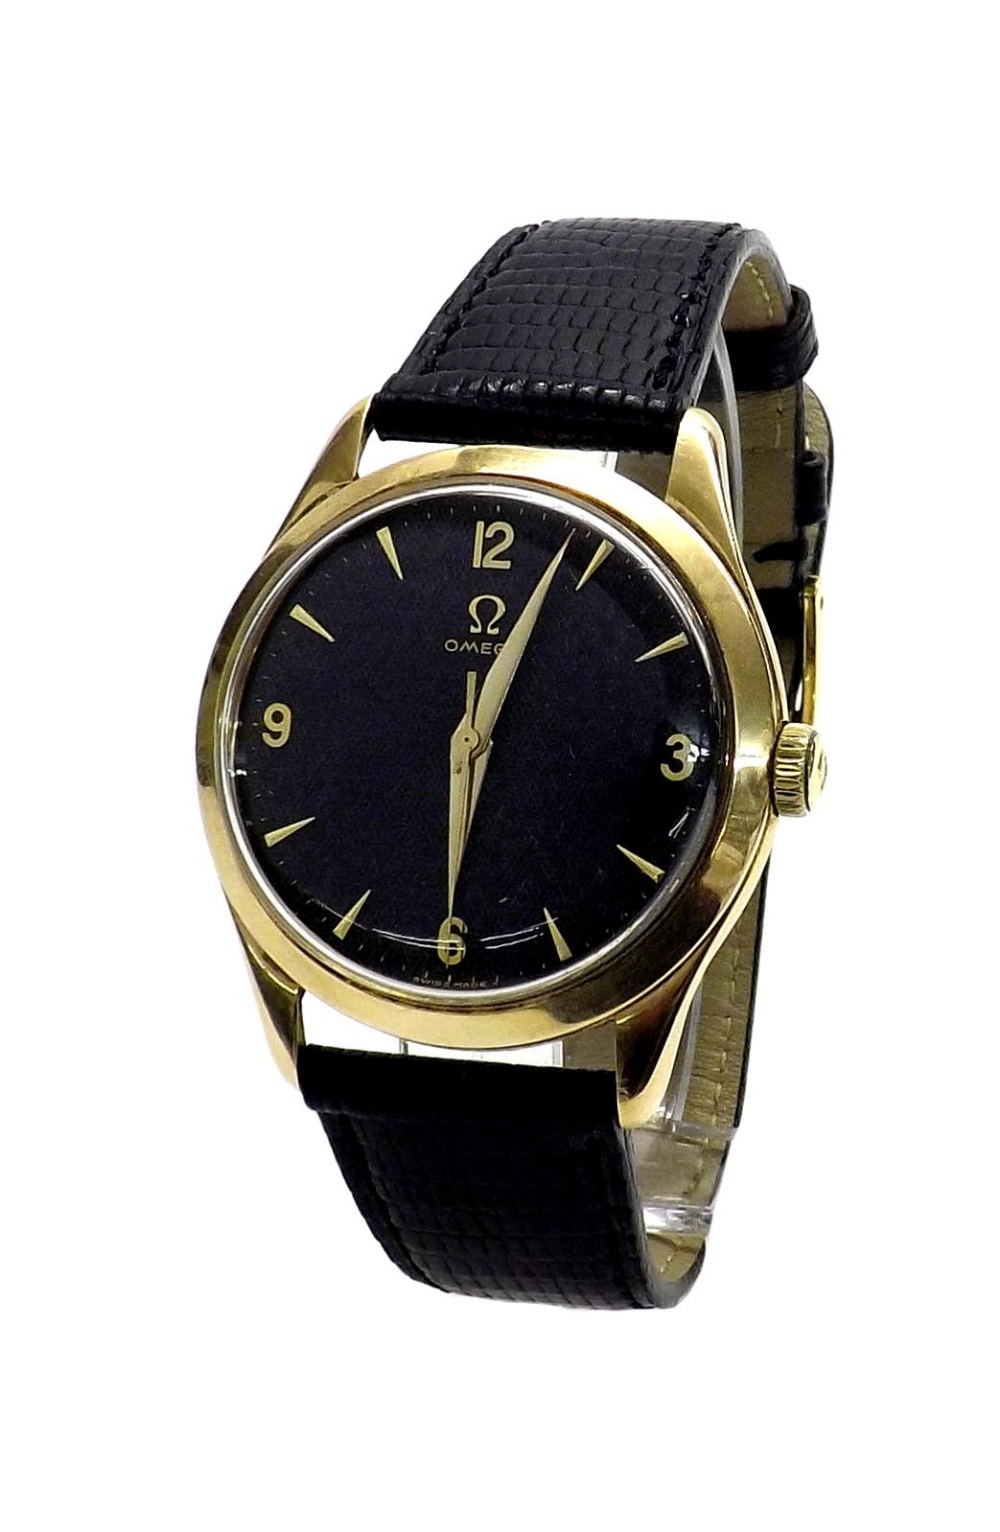 Omega 14k gentleman's wristwatch, circa 1950/51, ref. 2624, circular black honeycomb dial with